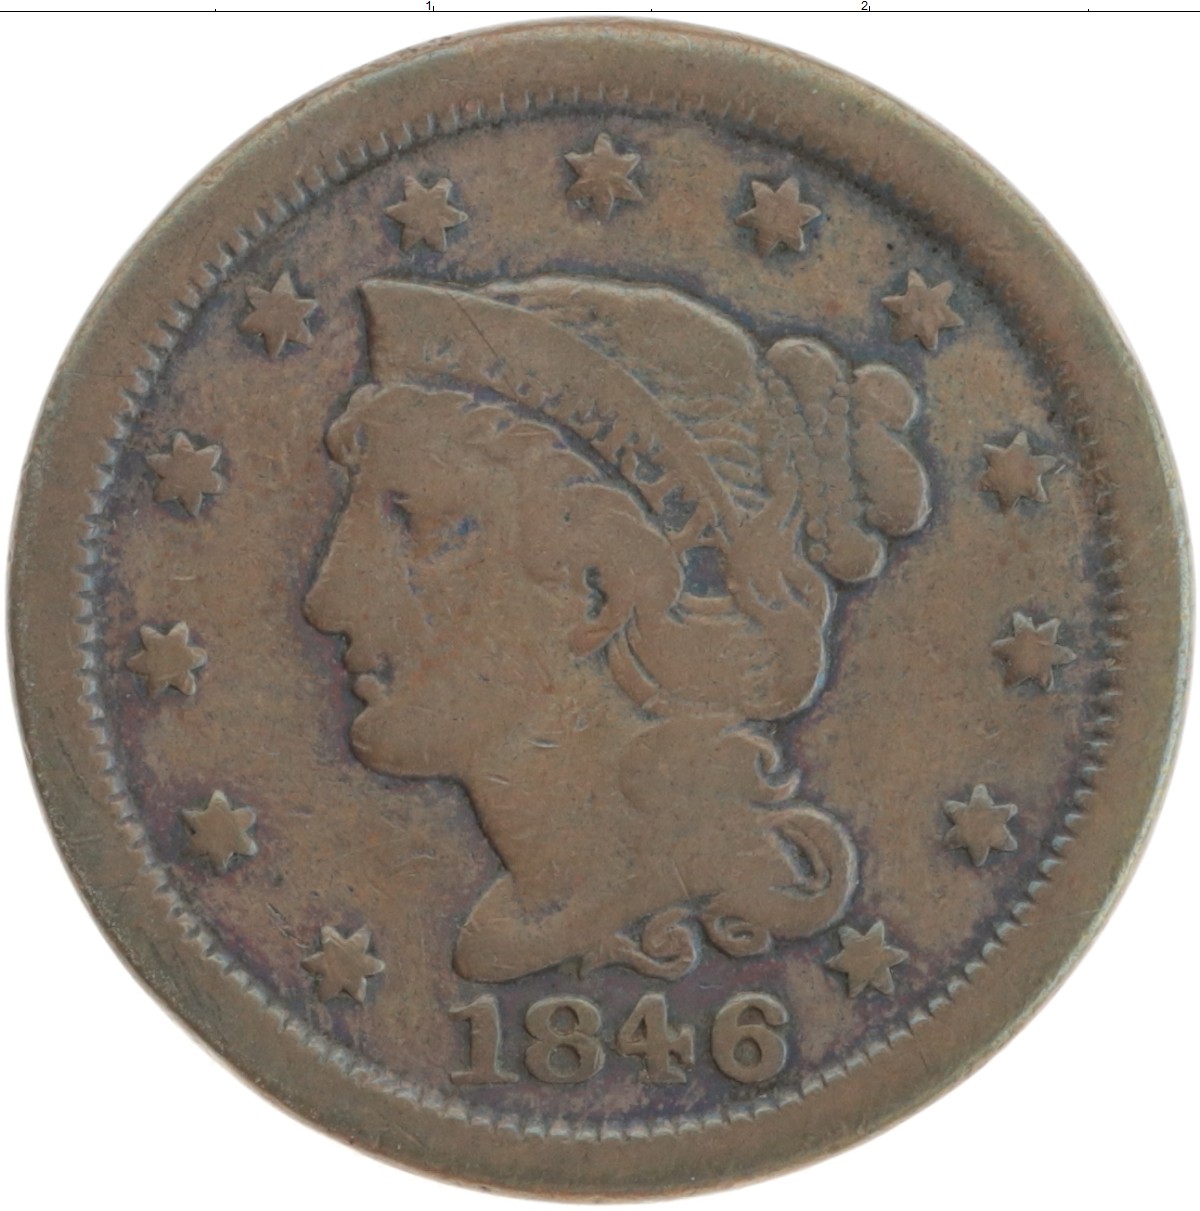 First coins. Американские монеты 1846. Монета 1 доллар 1846-1946. 1 Цент 1856. Монеты Америки 1 центов.